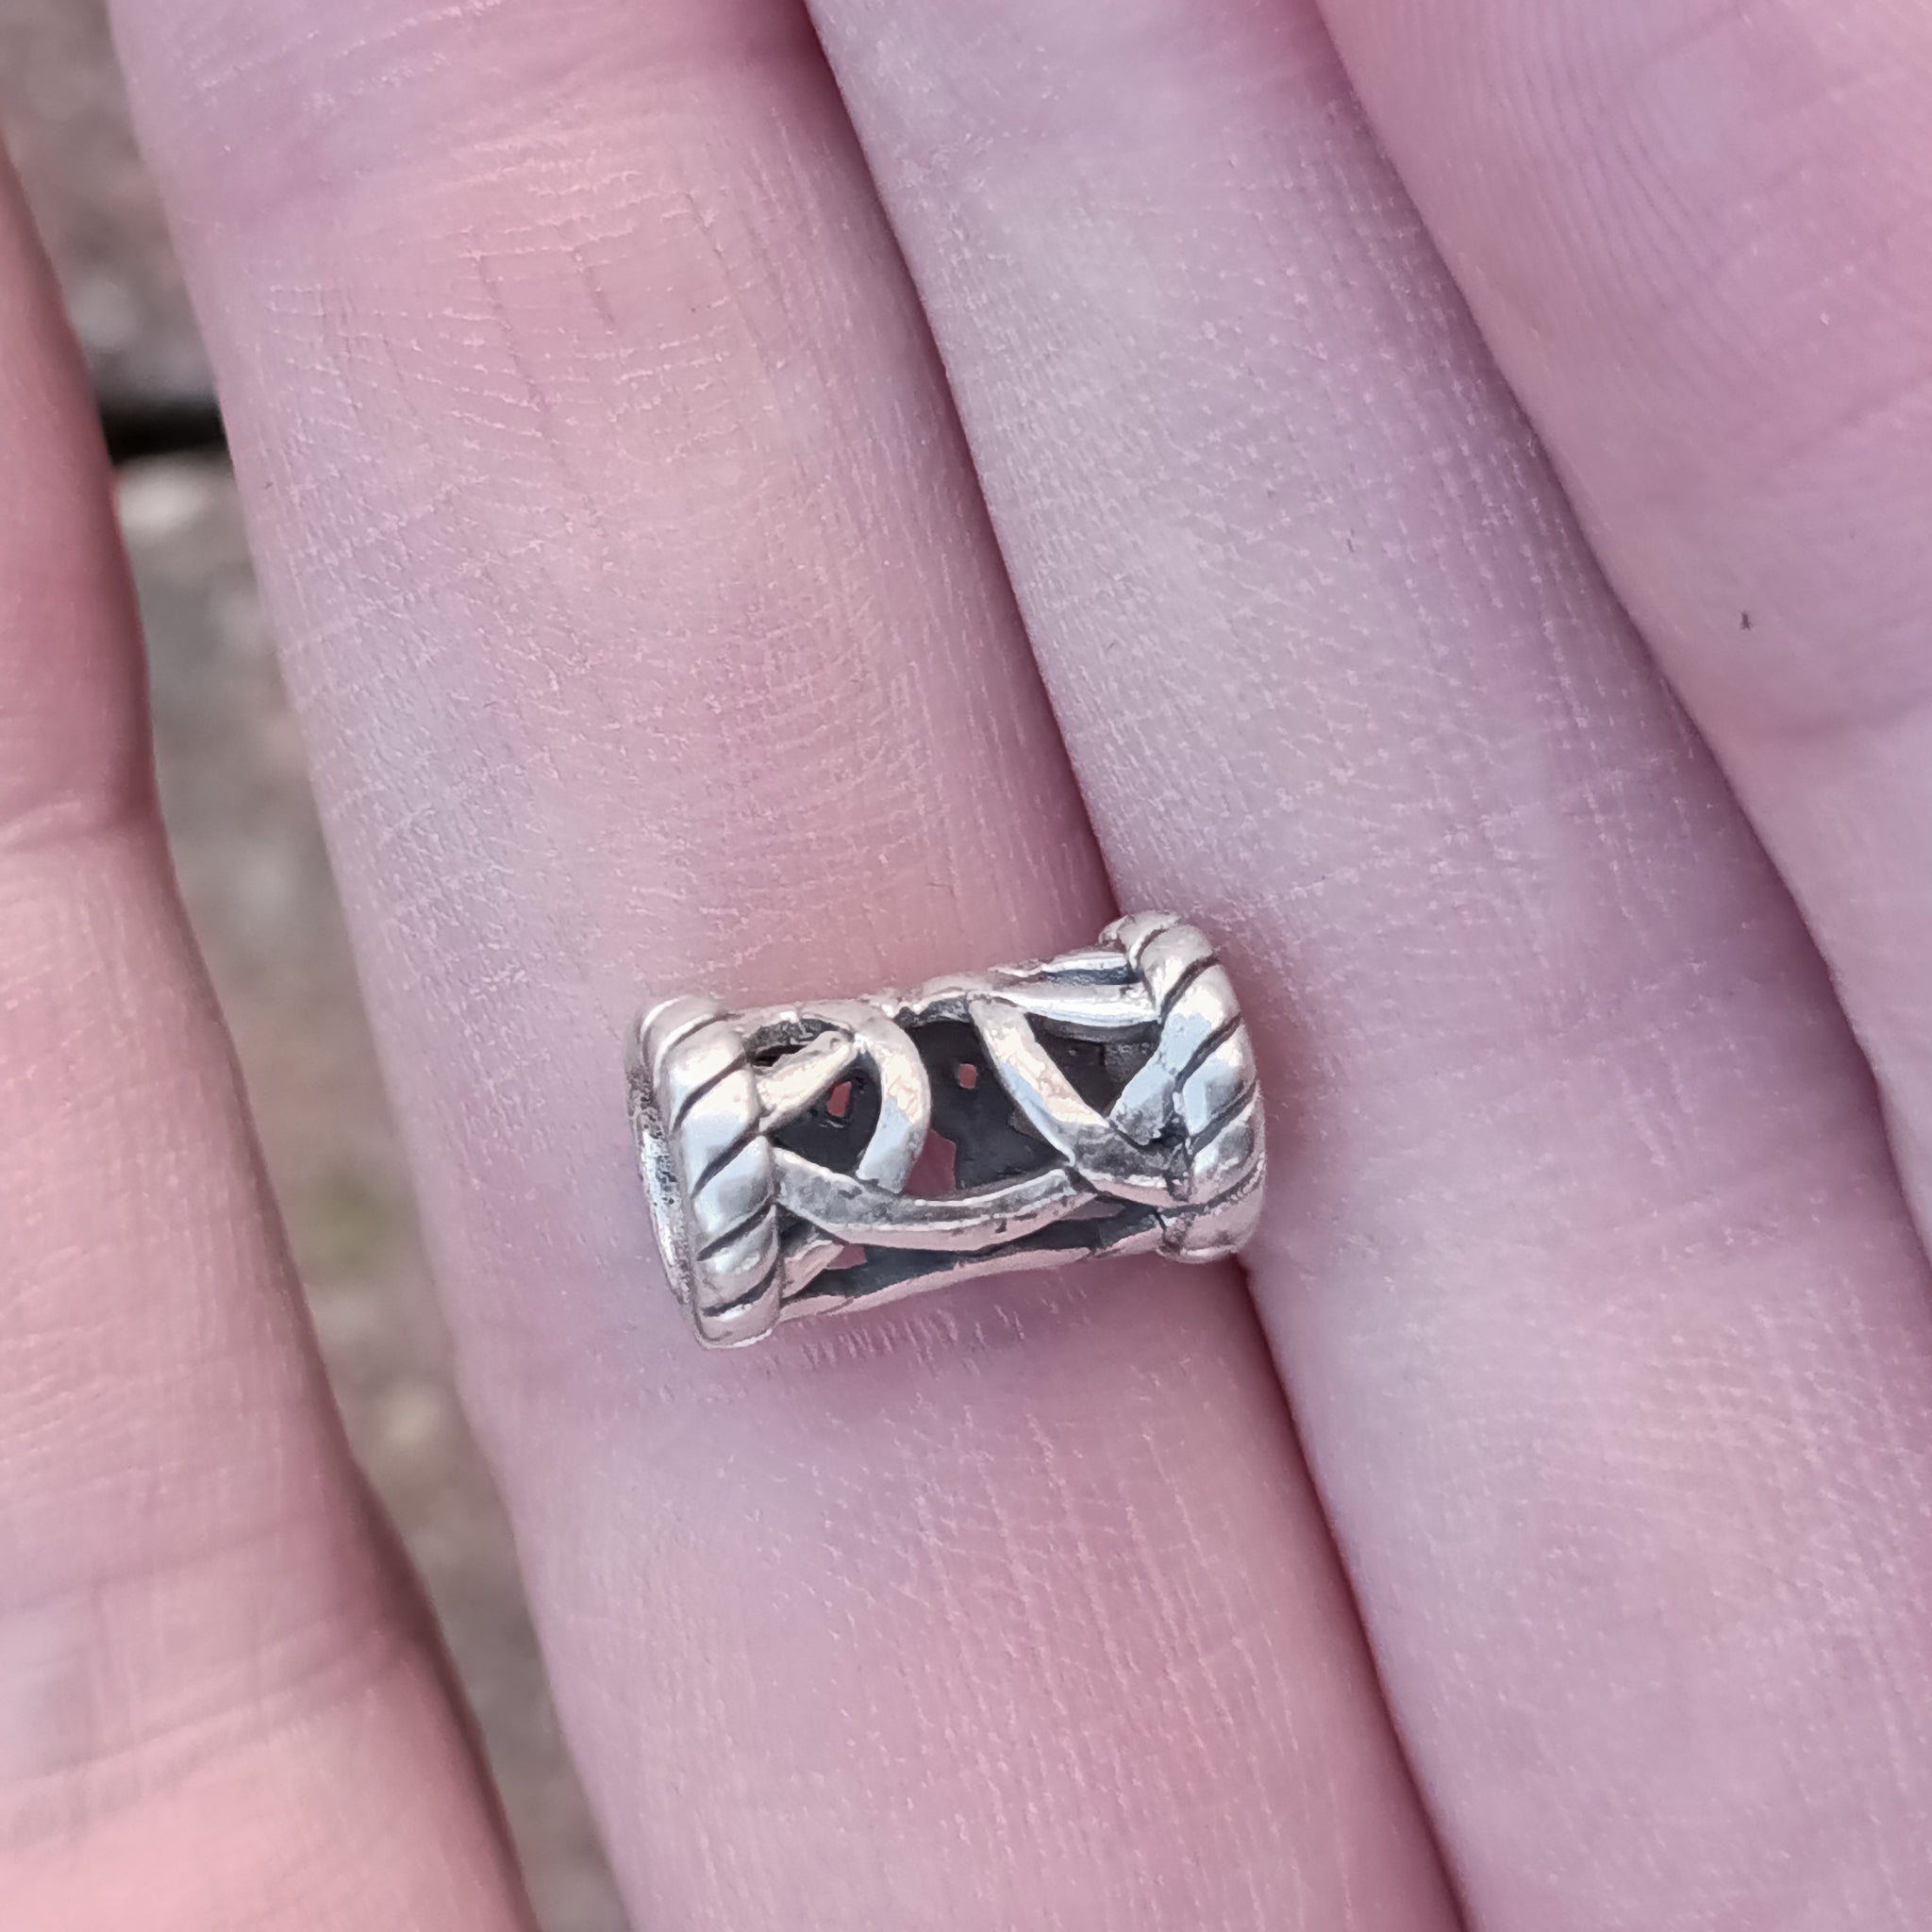 Small Silver Openwork Viking Beard Ring on Hand